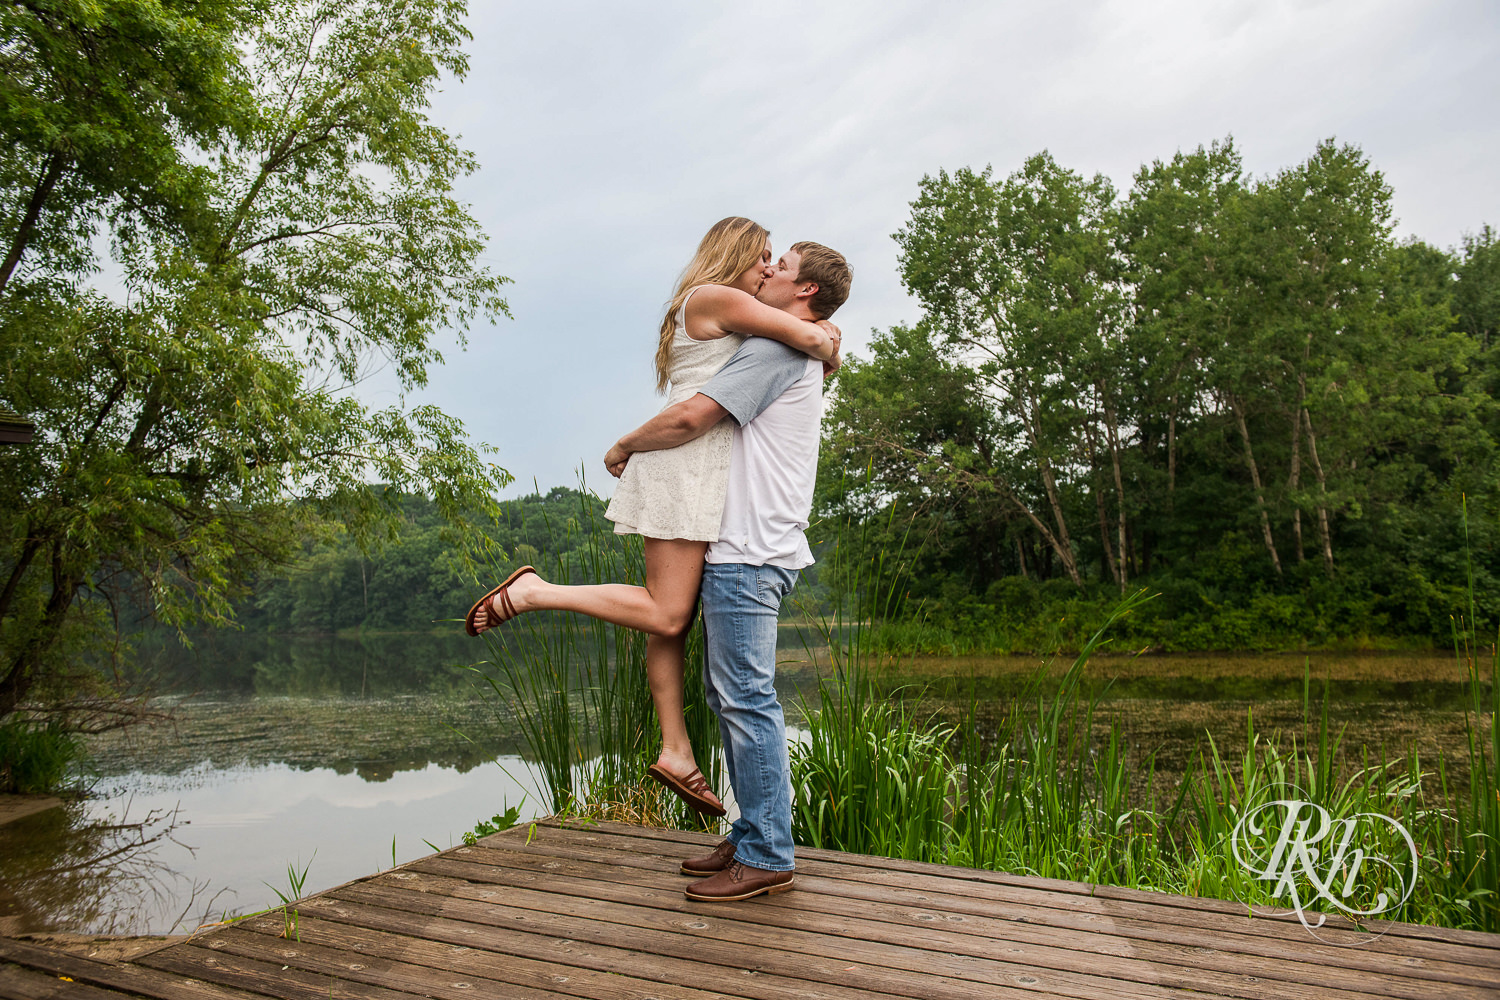 Man in jeans kisses woman in white dress on dock in Lebanon Hills Regional Park in Eagan, Minnesota.